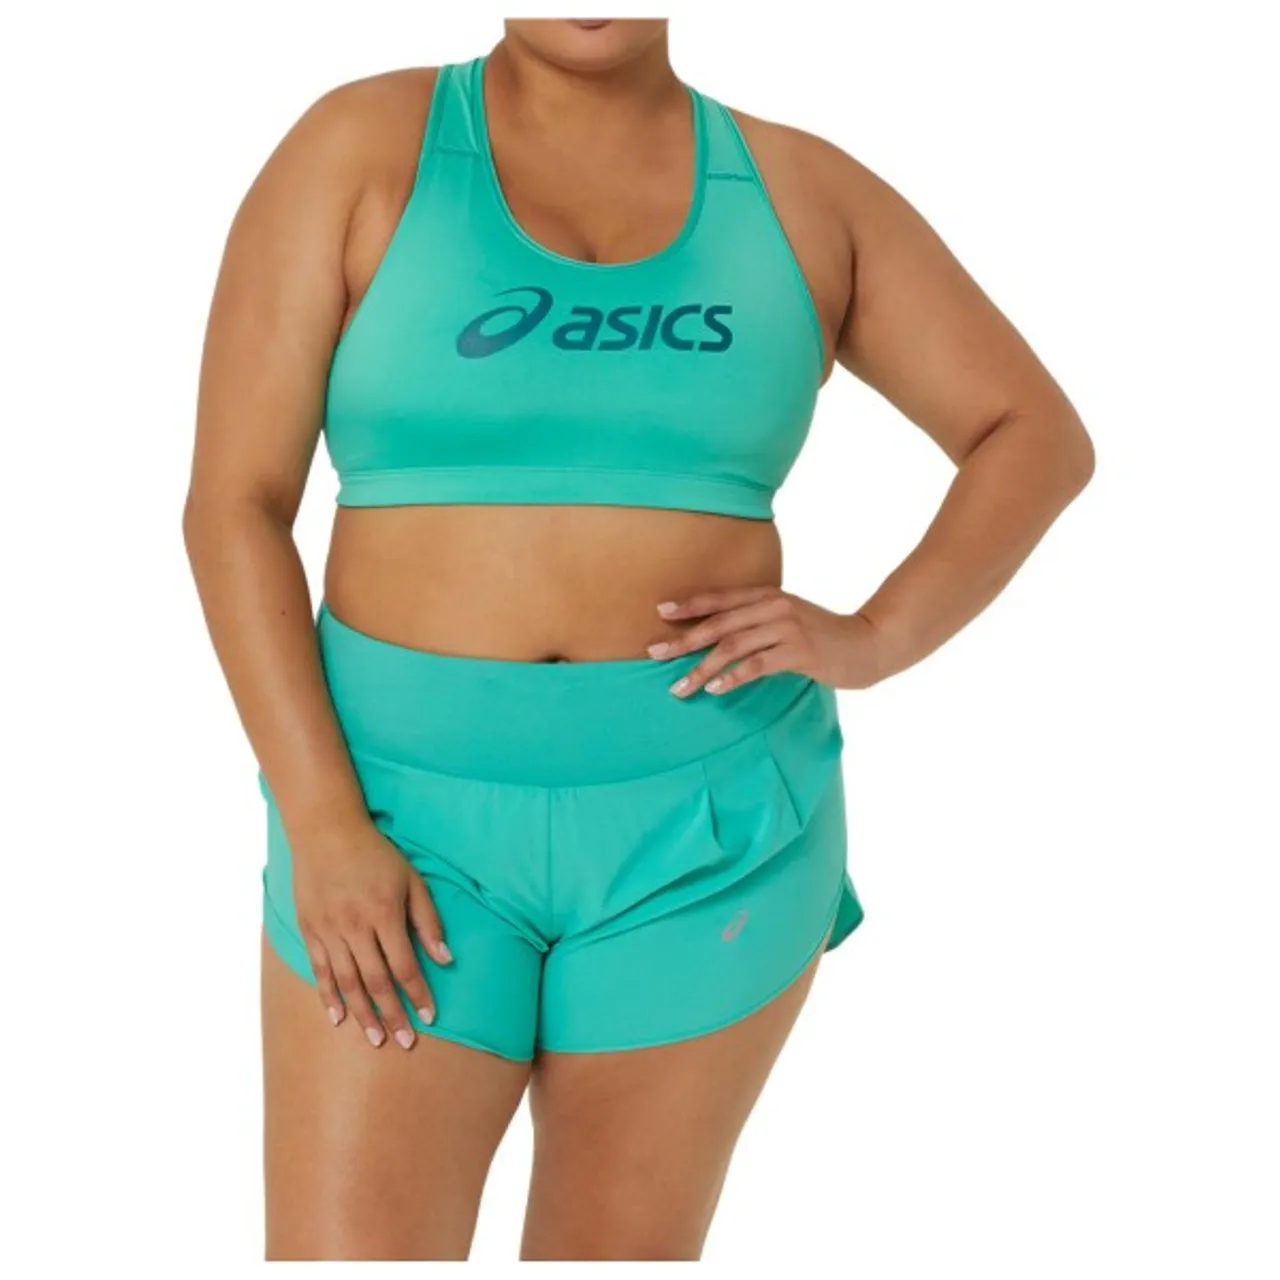 Asics - Women's Core Asics Logo Bra - Sports bra